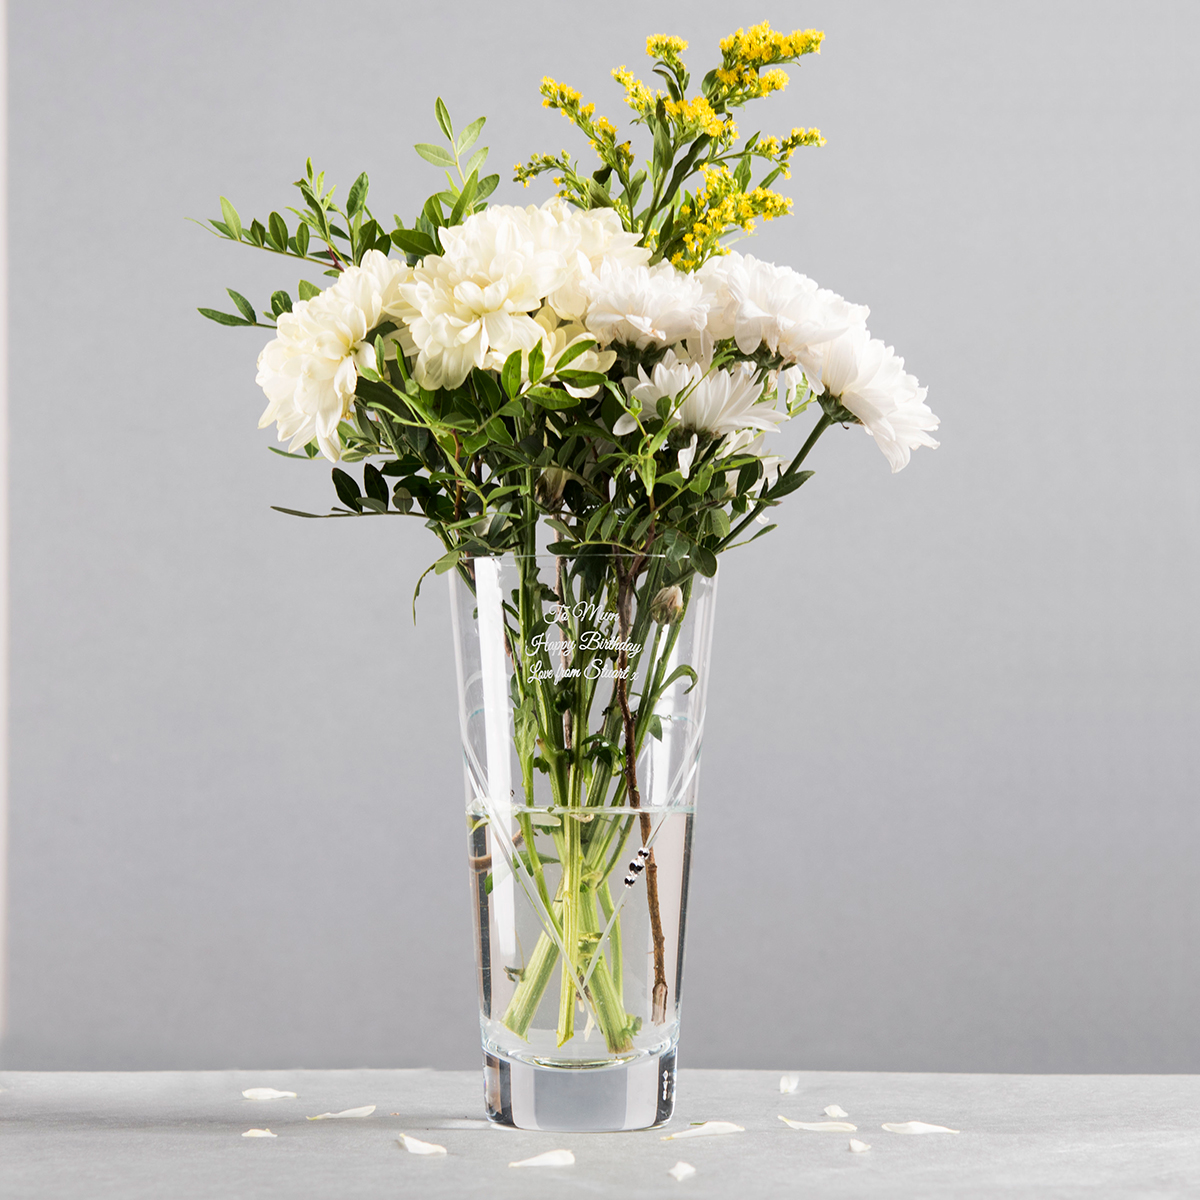 Personalised Swarovski Elements Glass Vase - Mother's Day